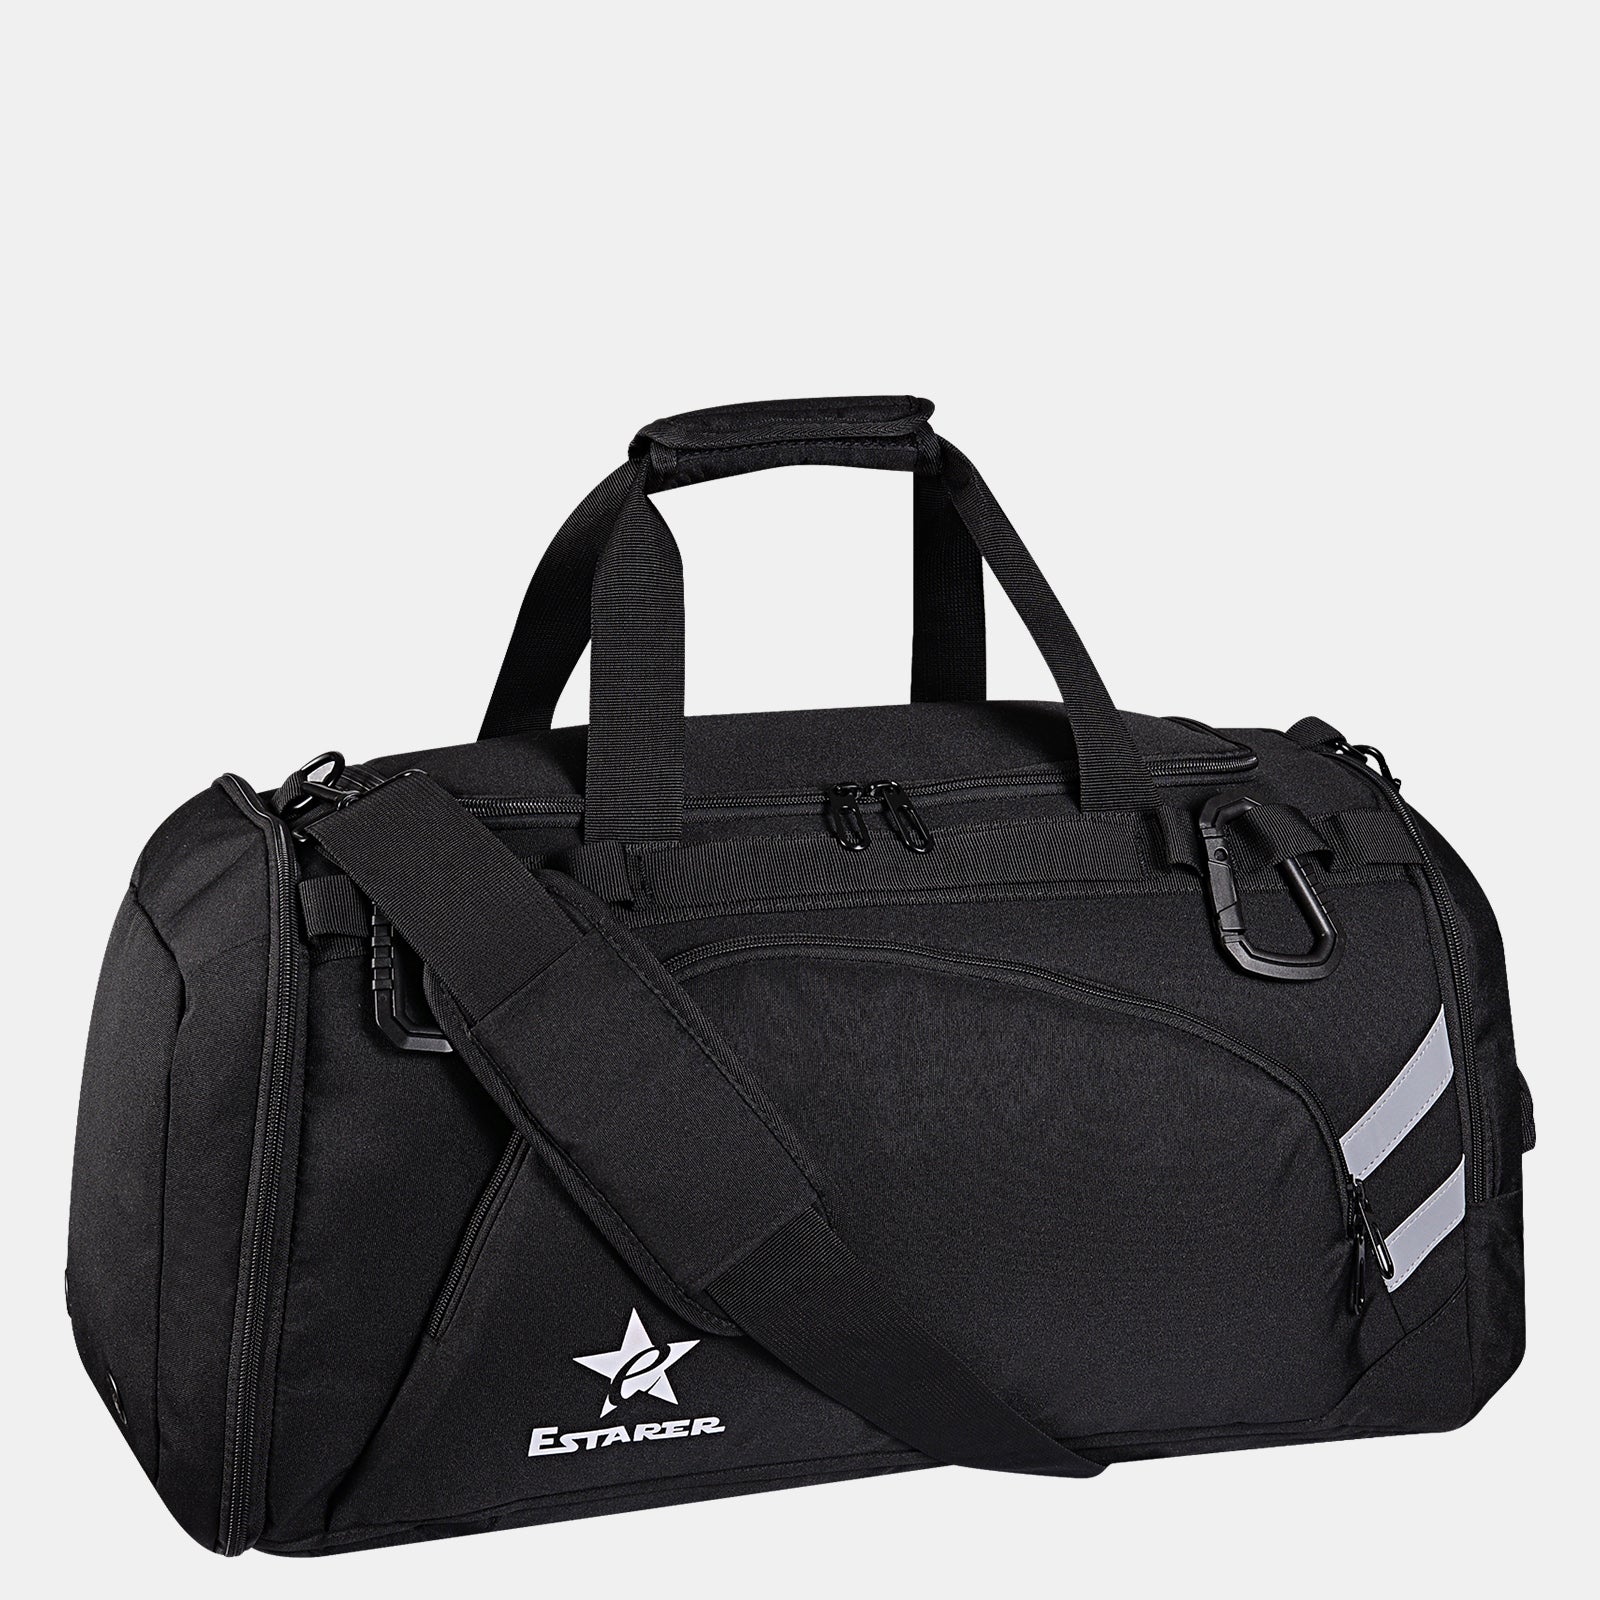 Estarer Black Duffel Sports Backpack 55L